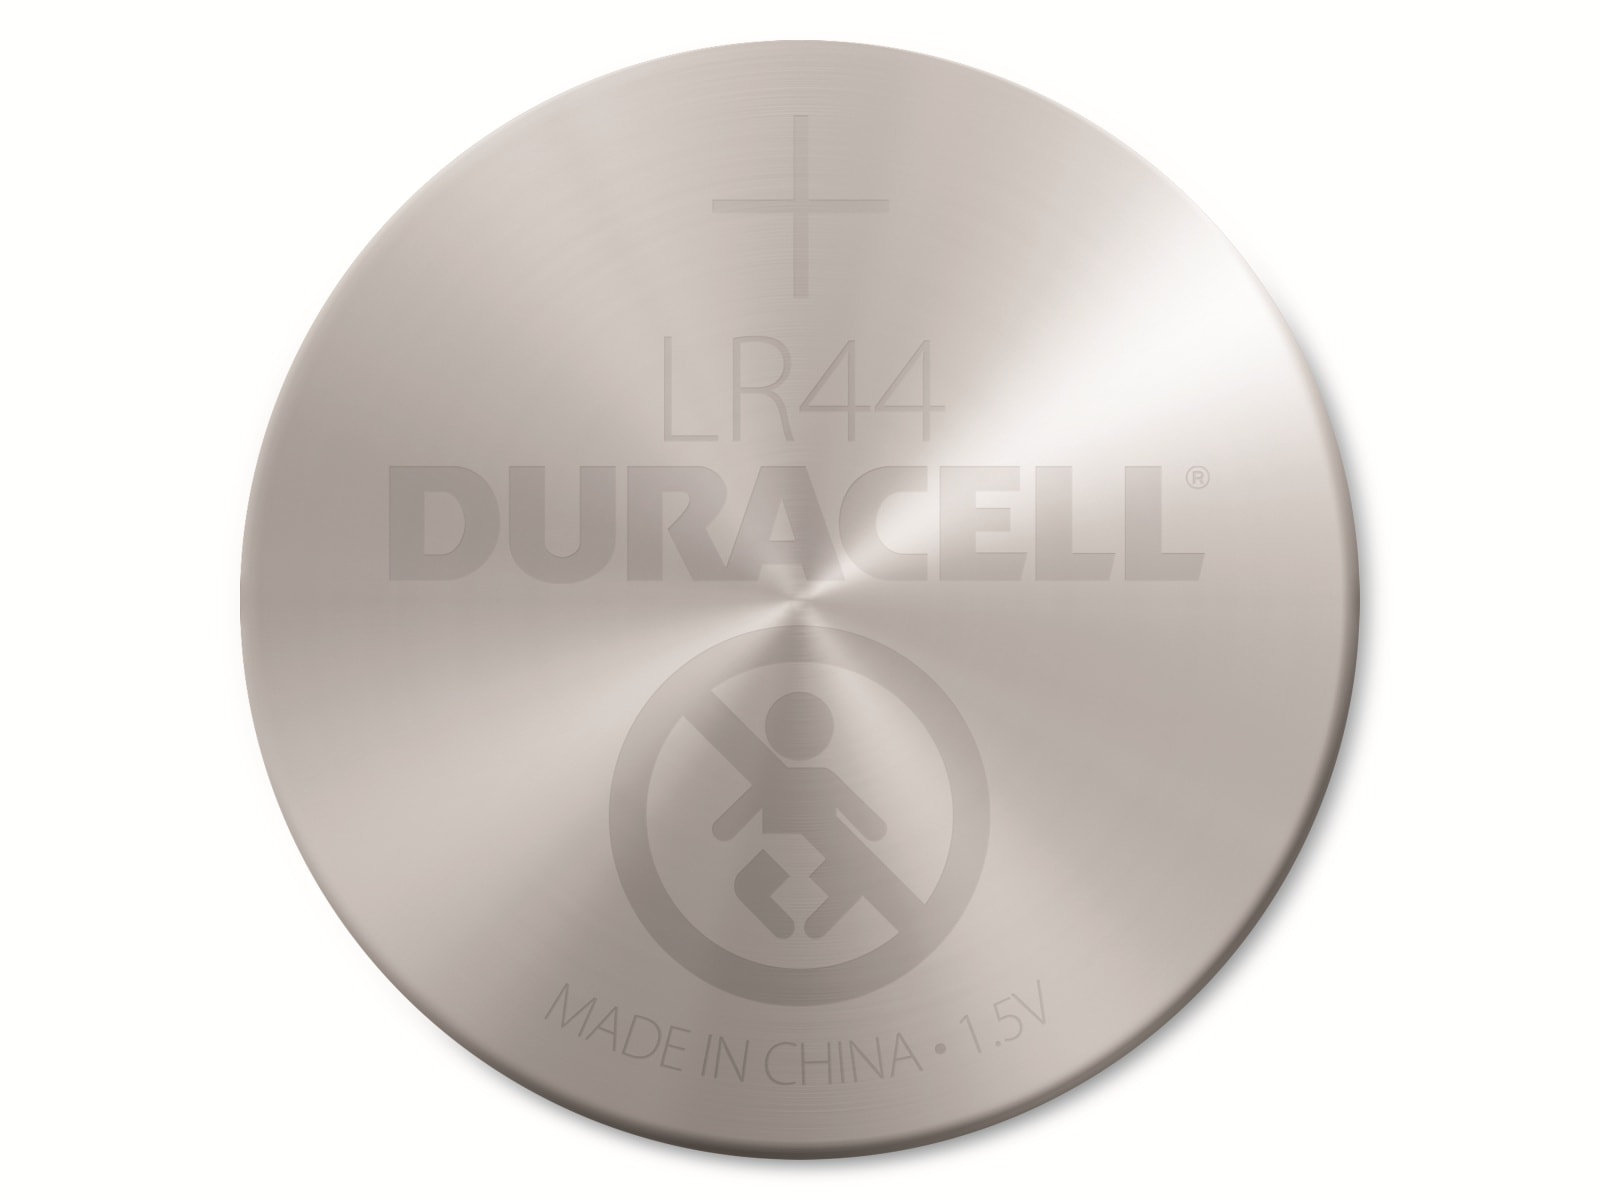 DURACELL Alkaline-Knopfzelle LR44, V13GA, 1.5V, Electronics, 2 Stück